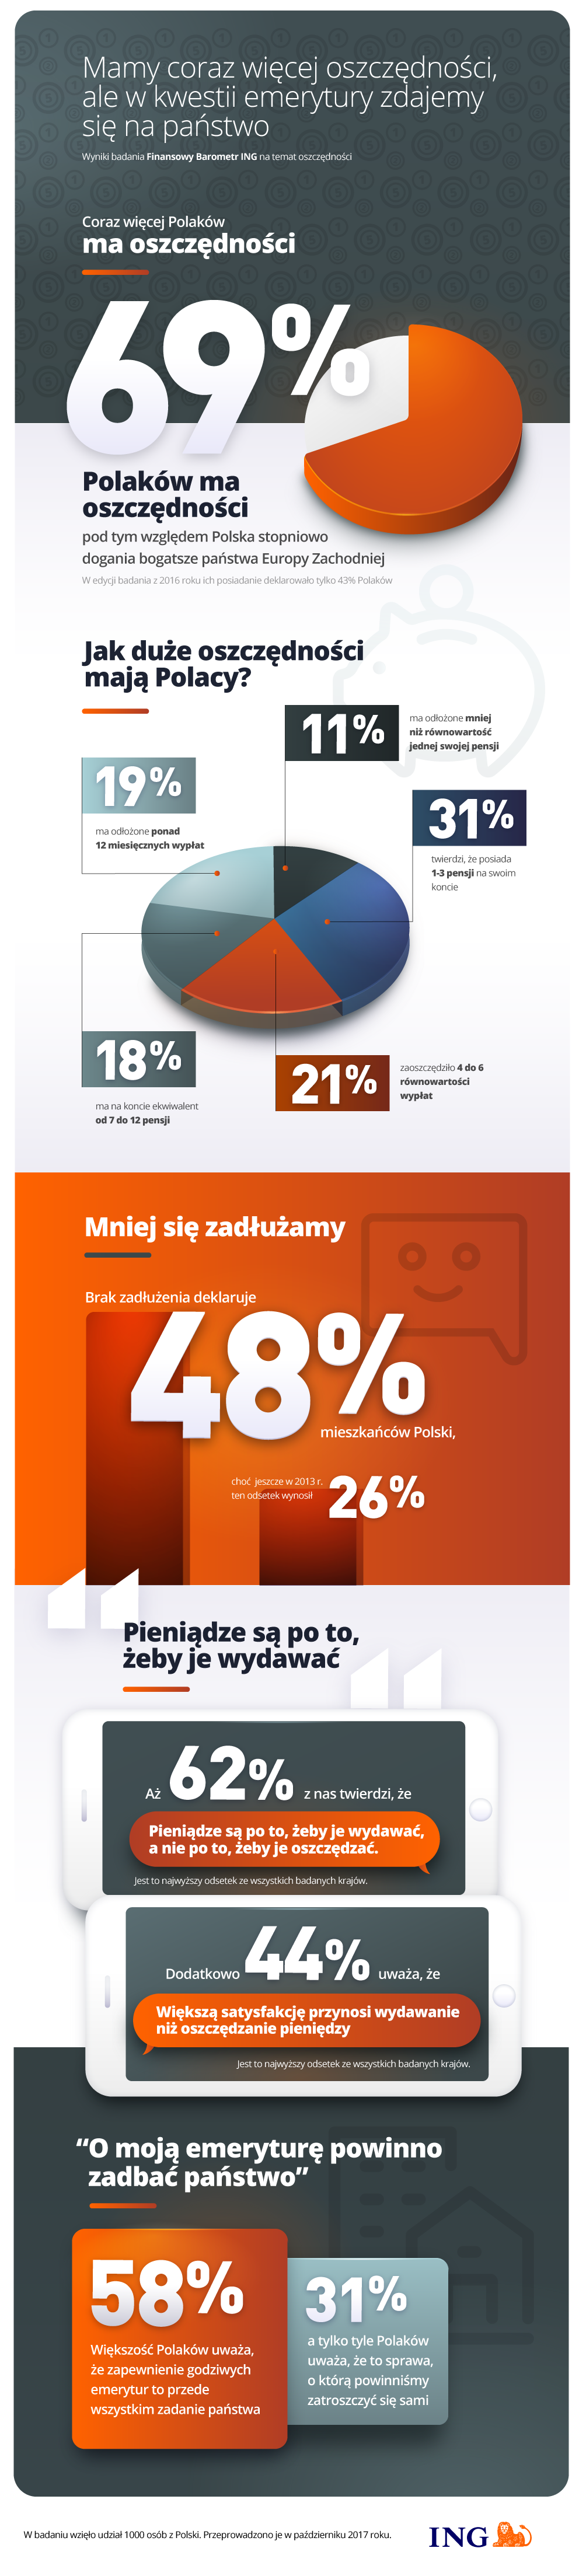 ING-infografika-oszczednosci.png